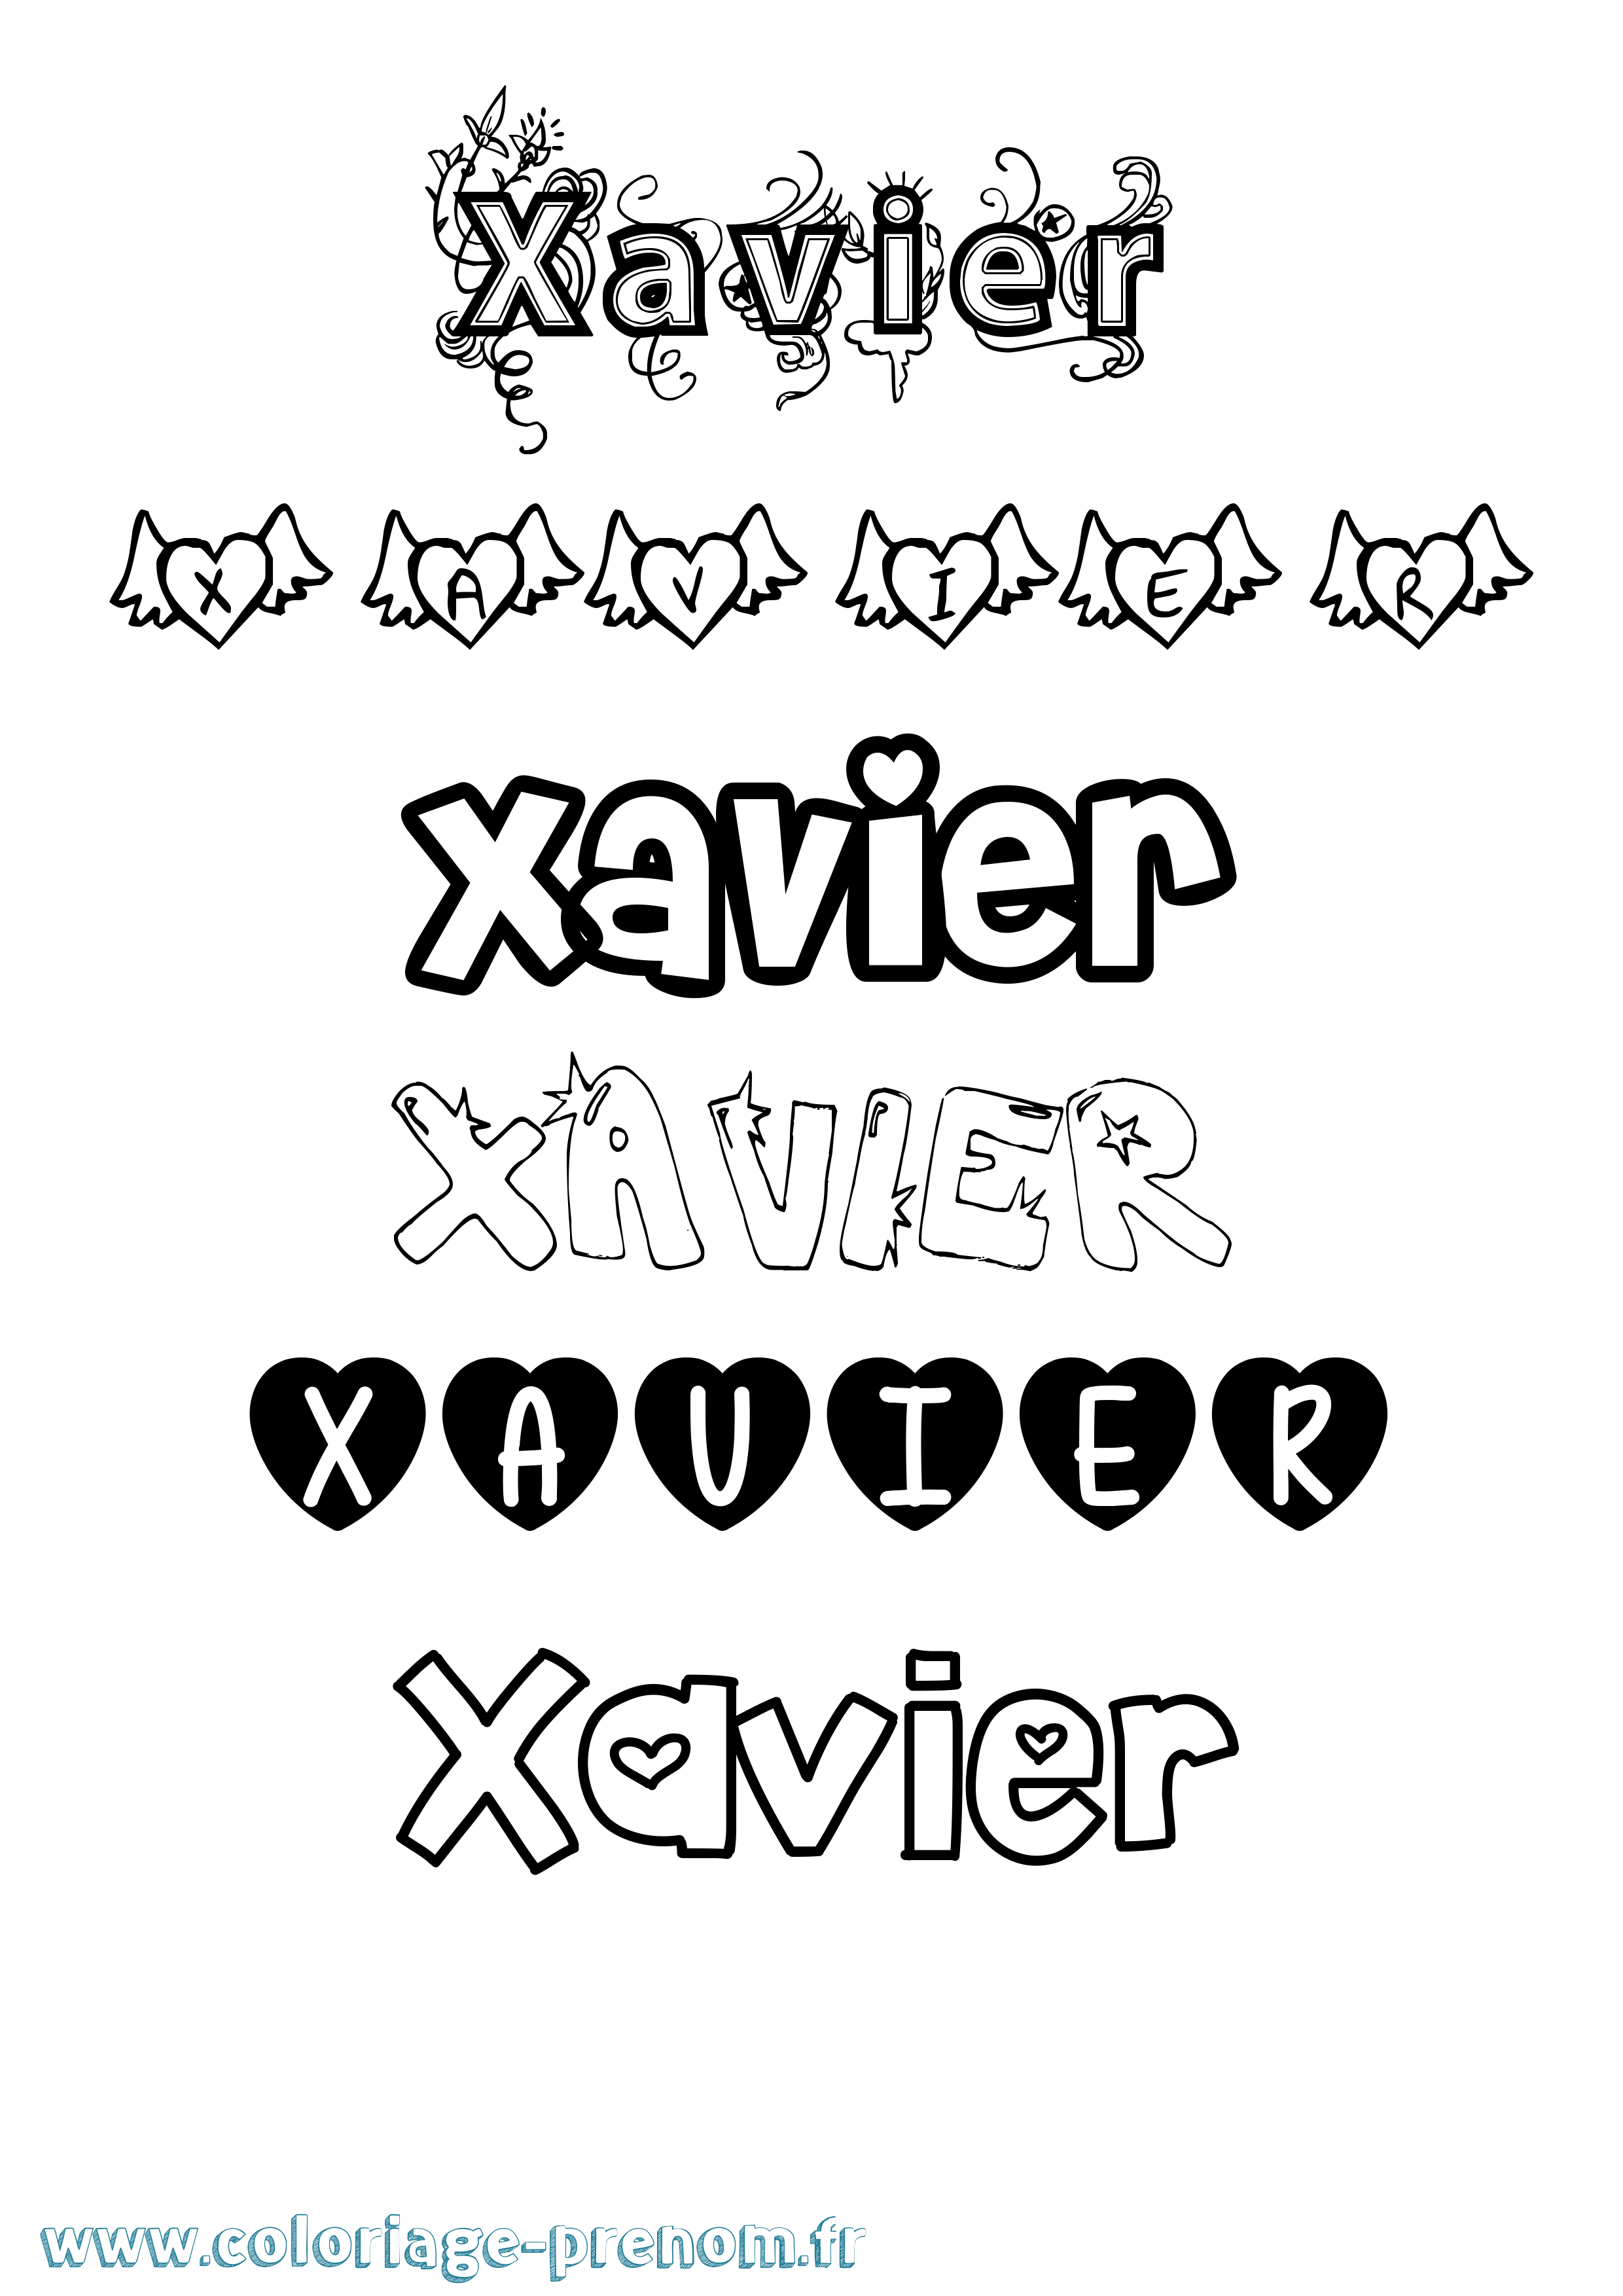 Coloriage prénom Xavier